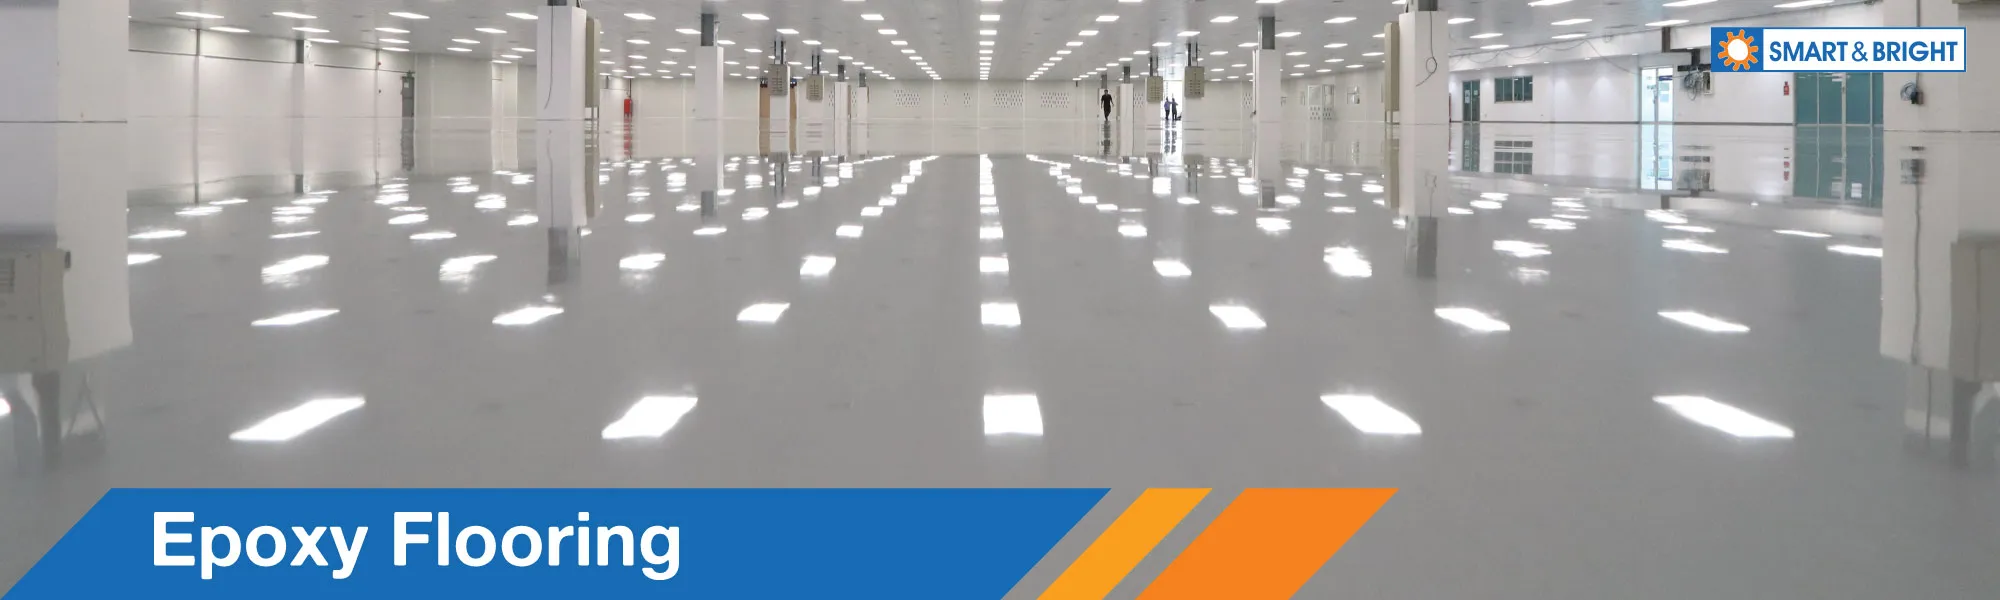 SMART & BRIGHT | บริการรับทำพื้น Epoxy (Epoxy Floor)​ เคลือบพื้น โรงงานอุตสาหกรรม พื้นคลังสินค้า พื้นโรงพยาบาล ​​